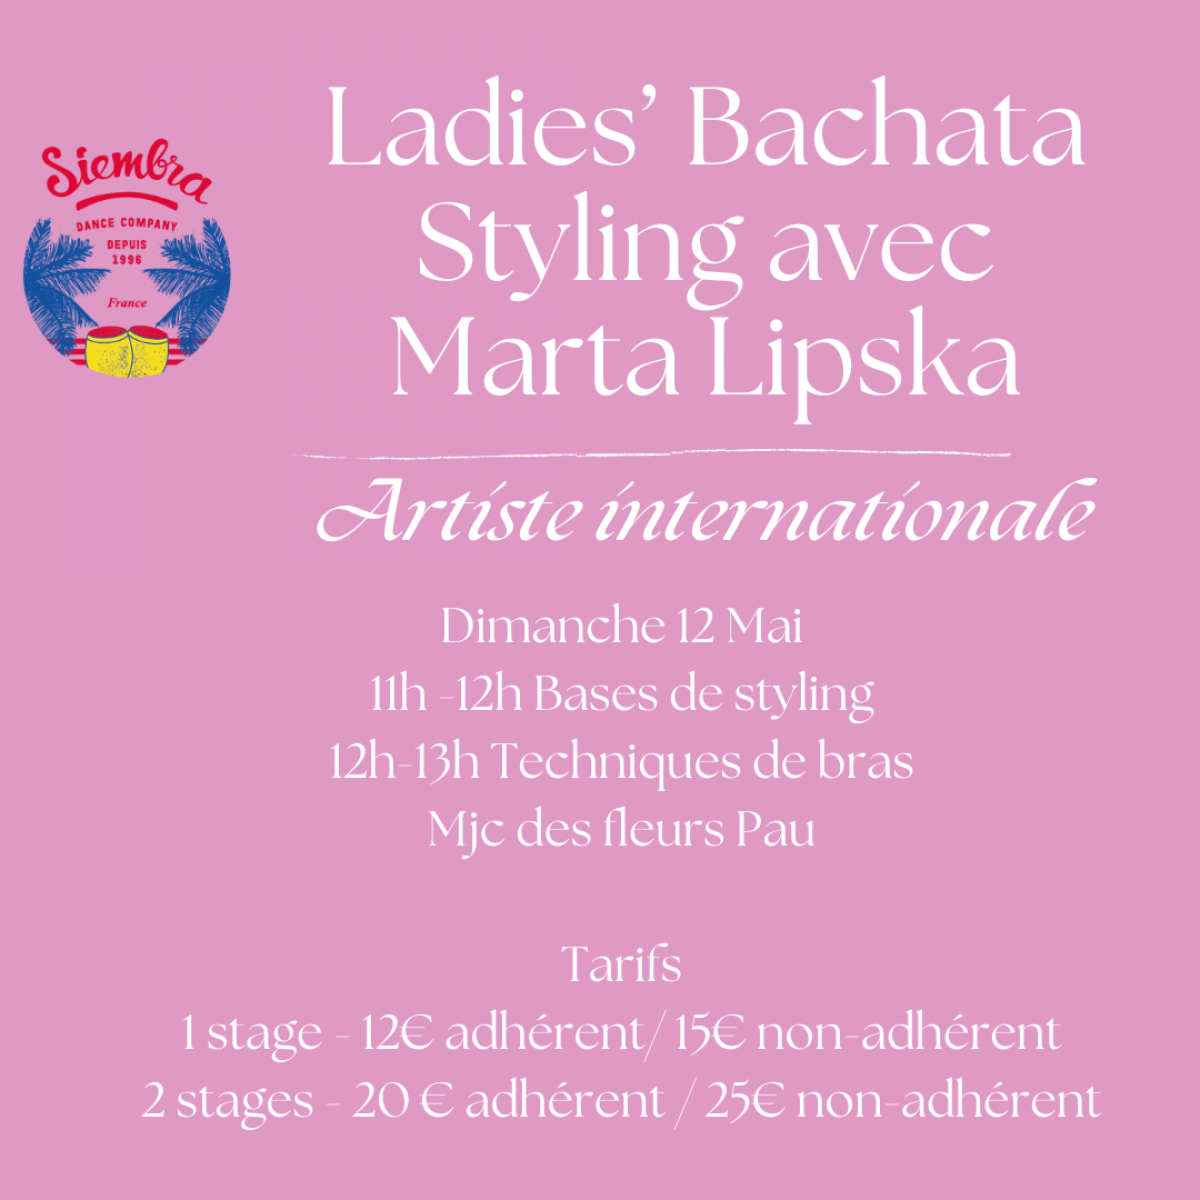 Ladies Bachata Styling by Marta Lipska